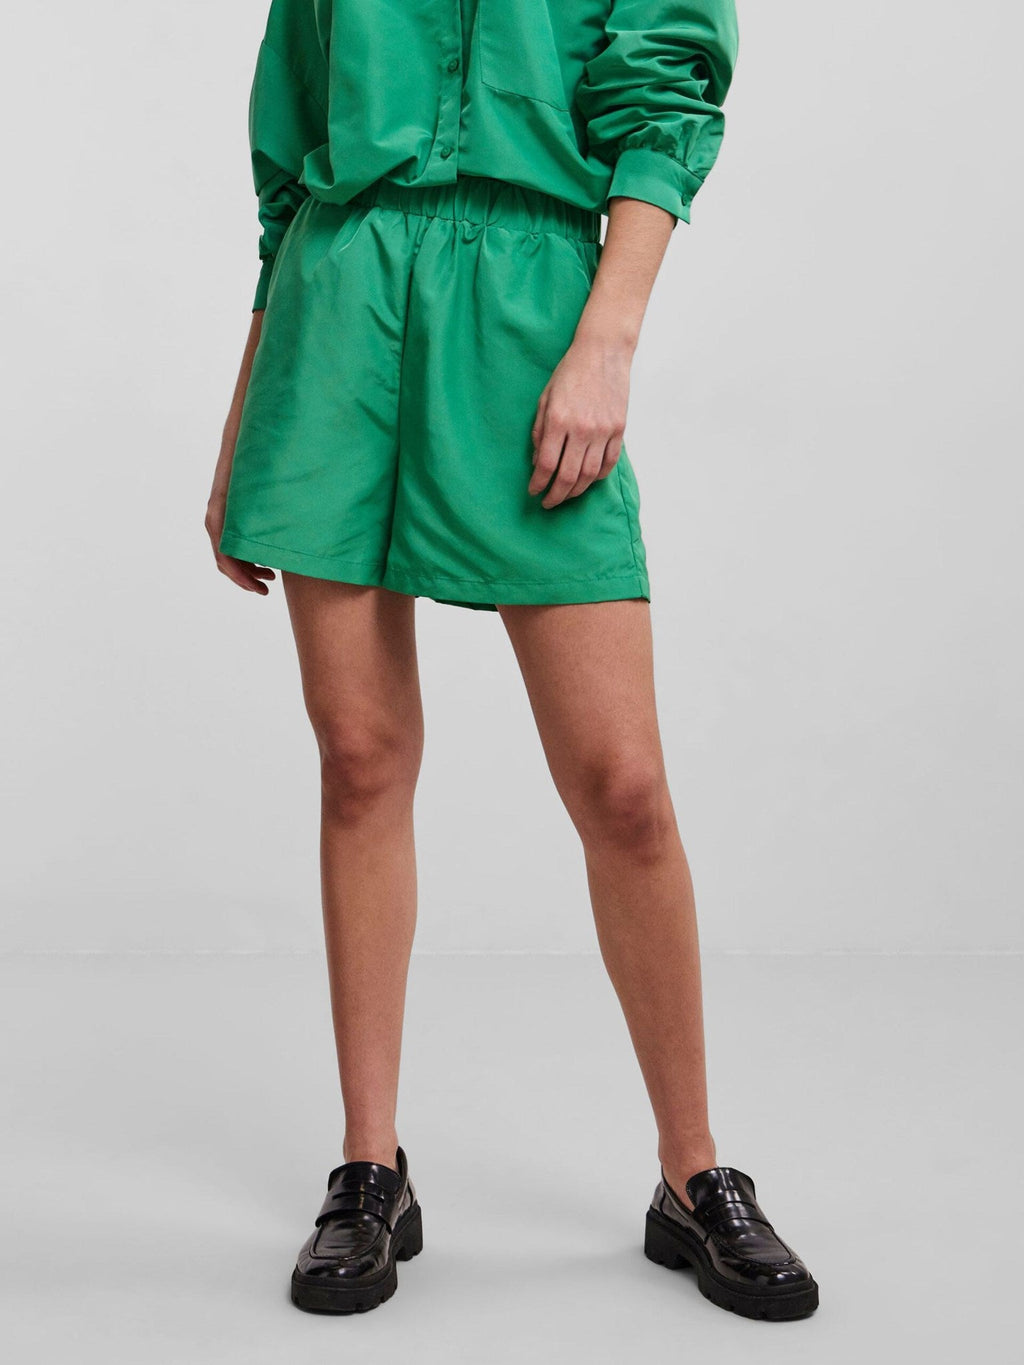 Chrilina High Taies Shorts - Green simple